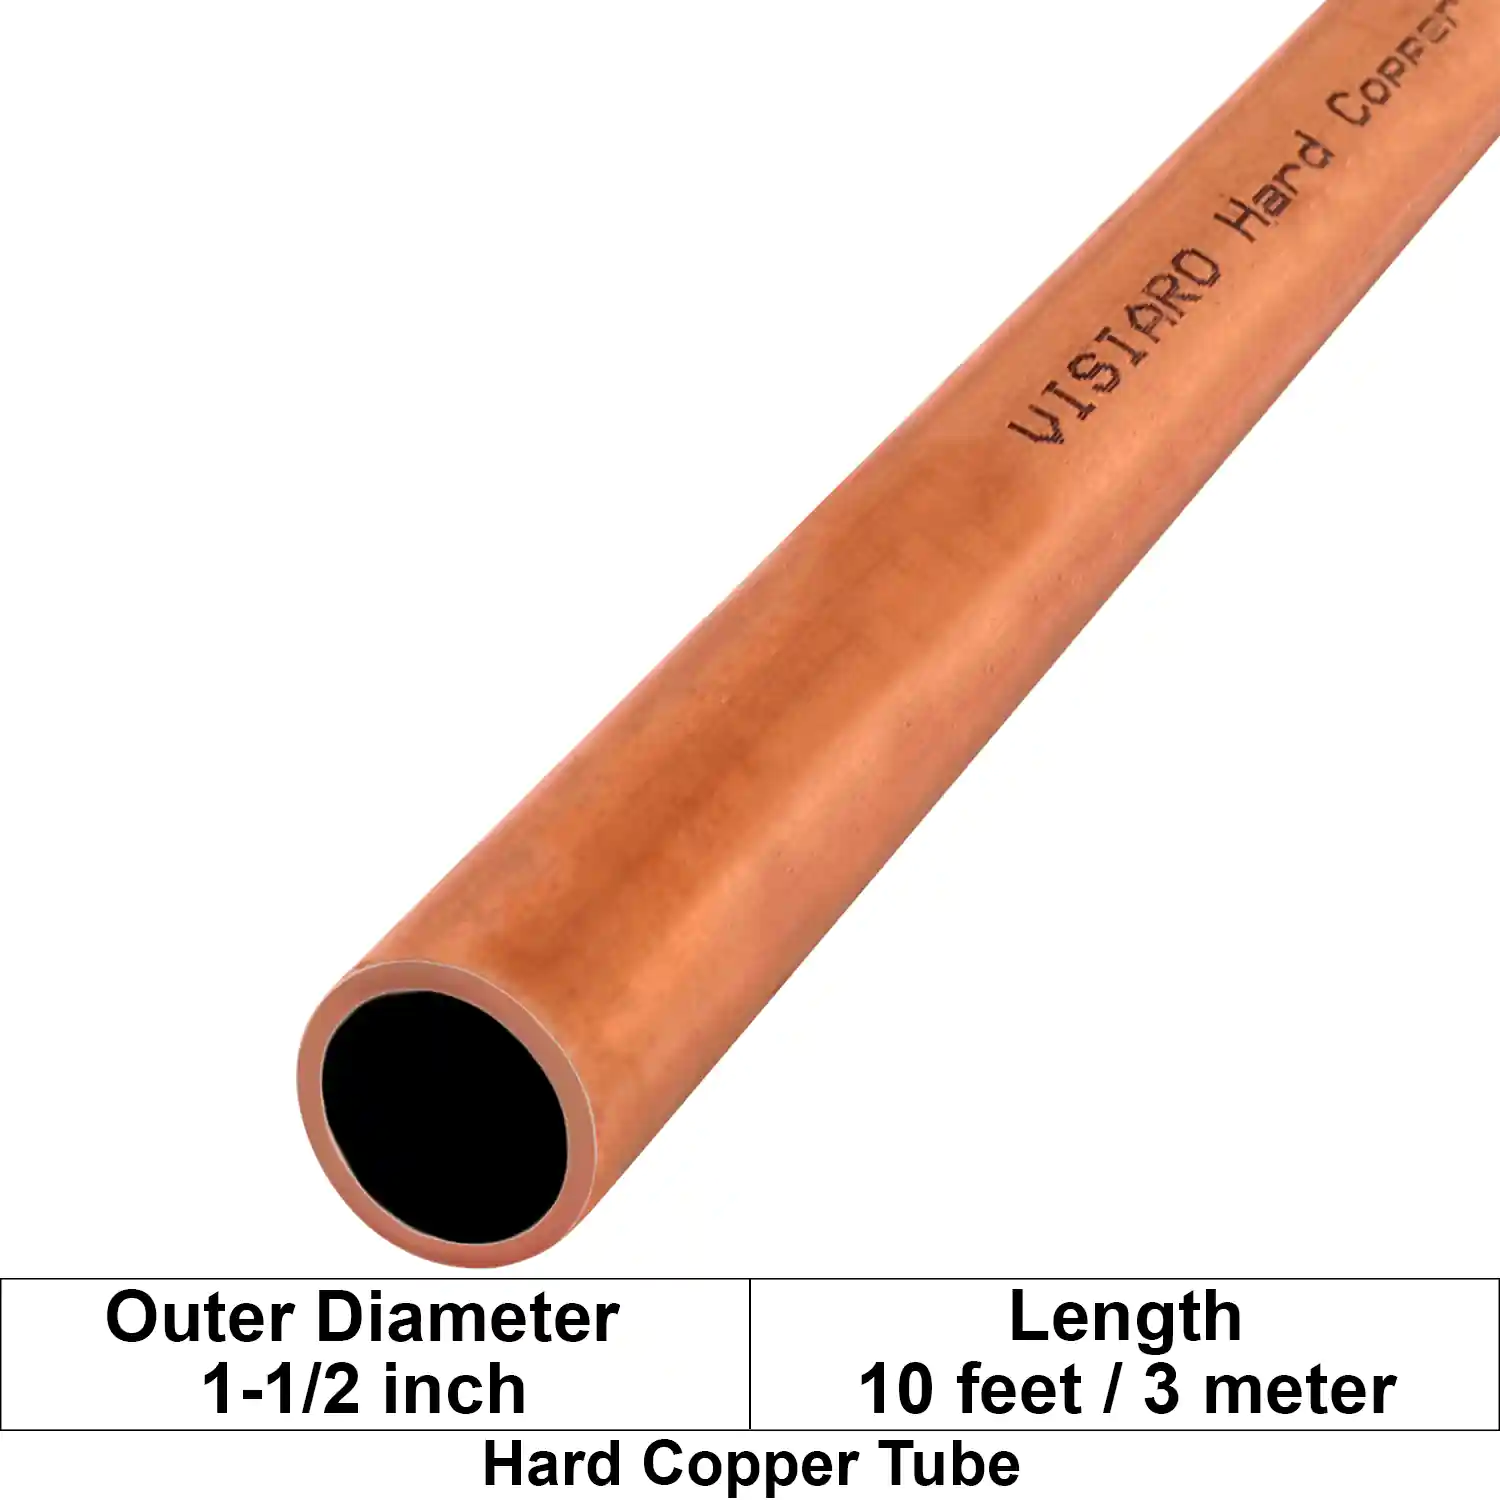 Visiaro Hard Copper Tube 10ft long Outer Diameter - 1-1/2 inch